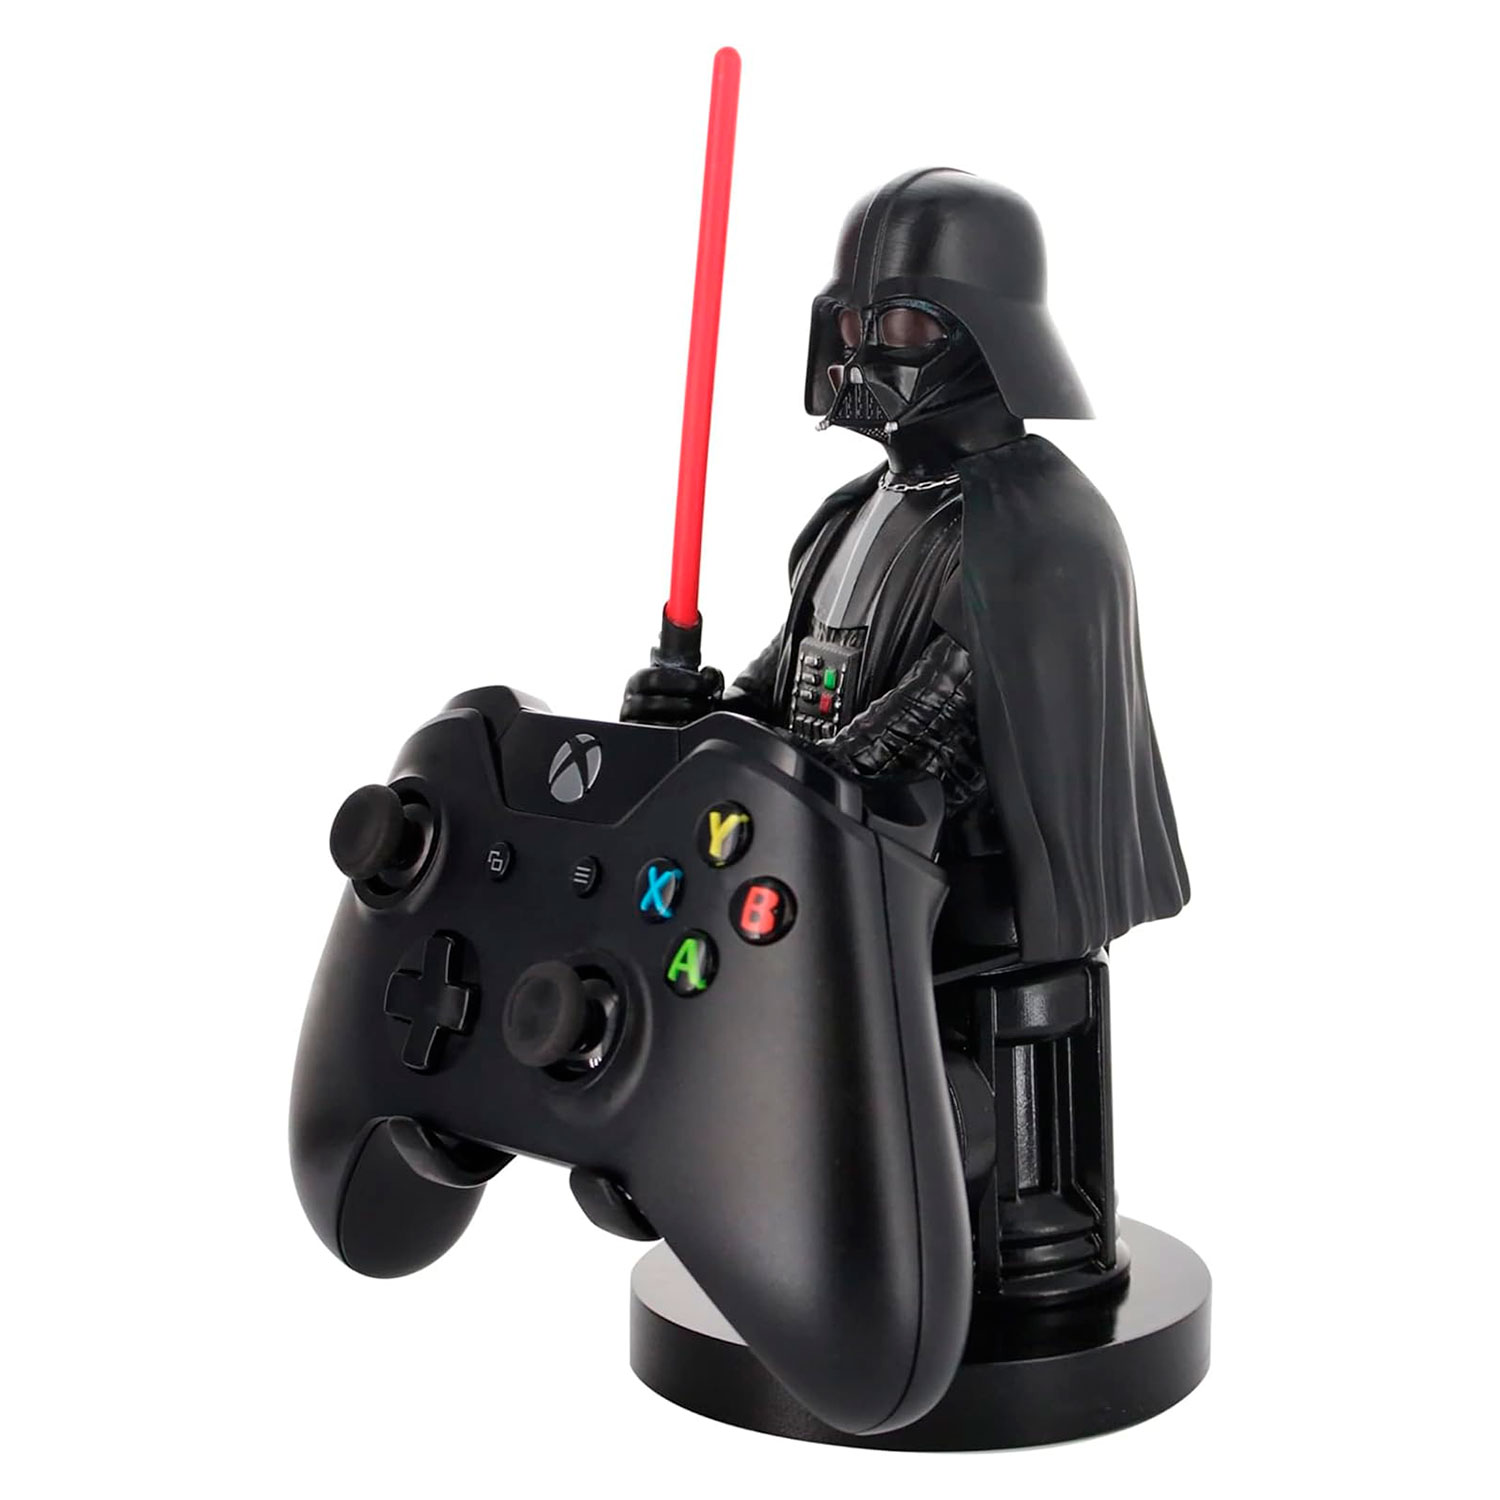 Suporte Cable Guys Star Wars Darth Vader para Controle e Smartphone